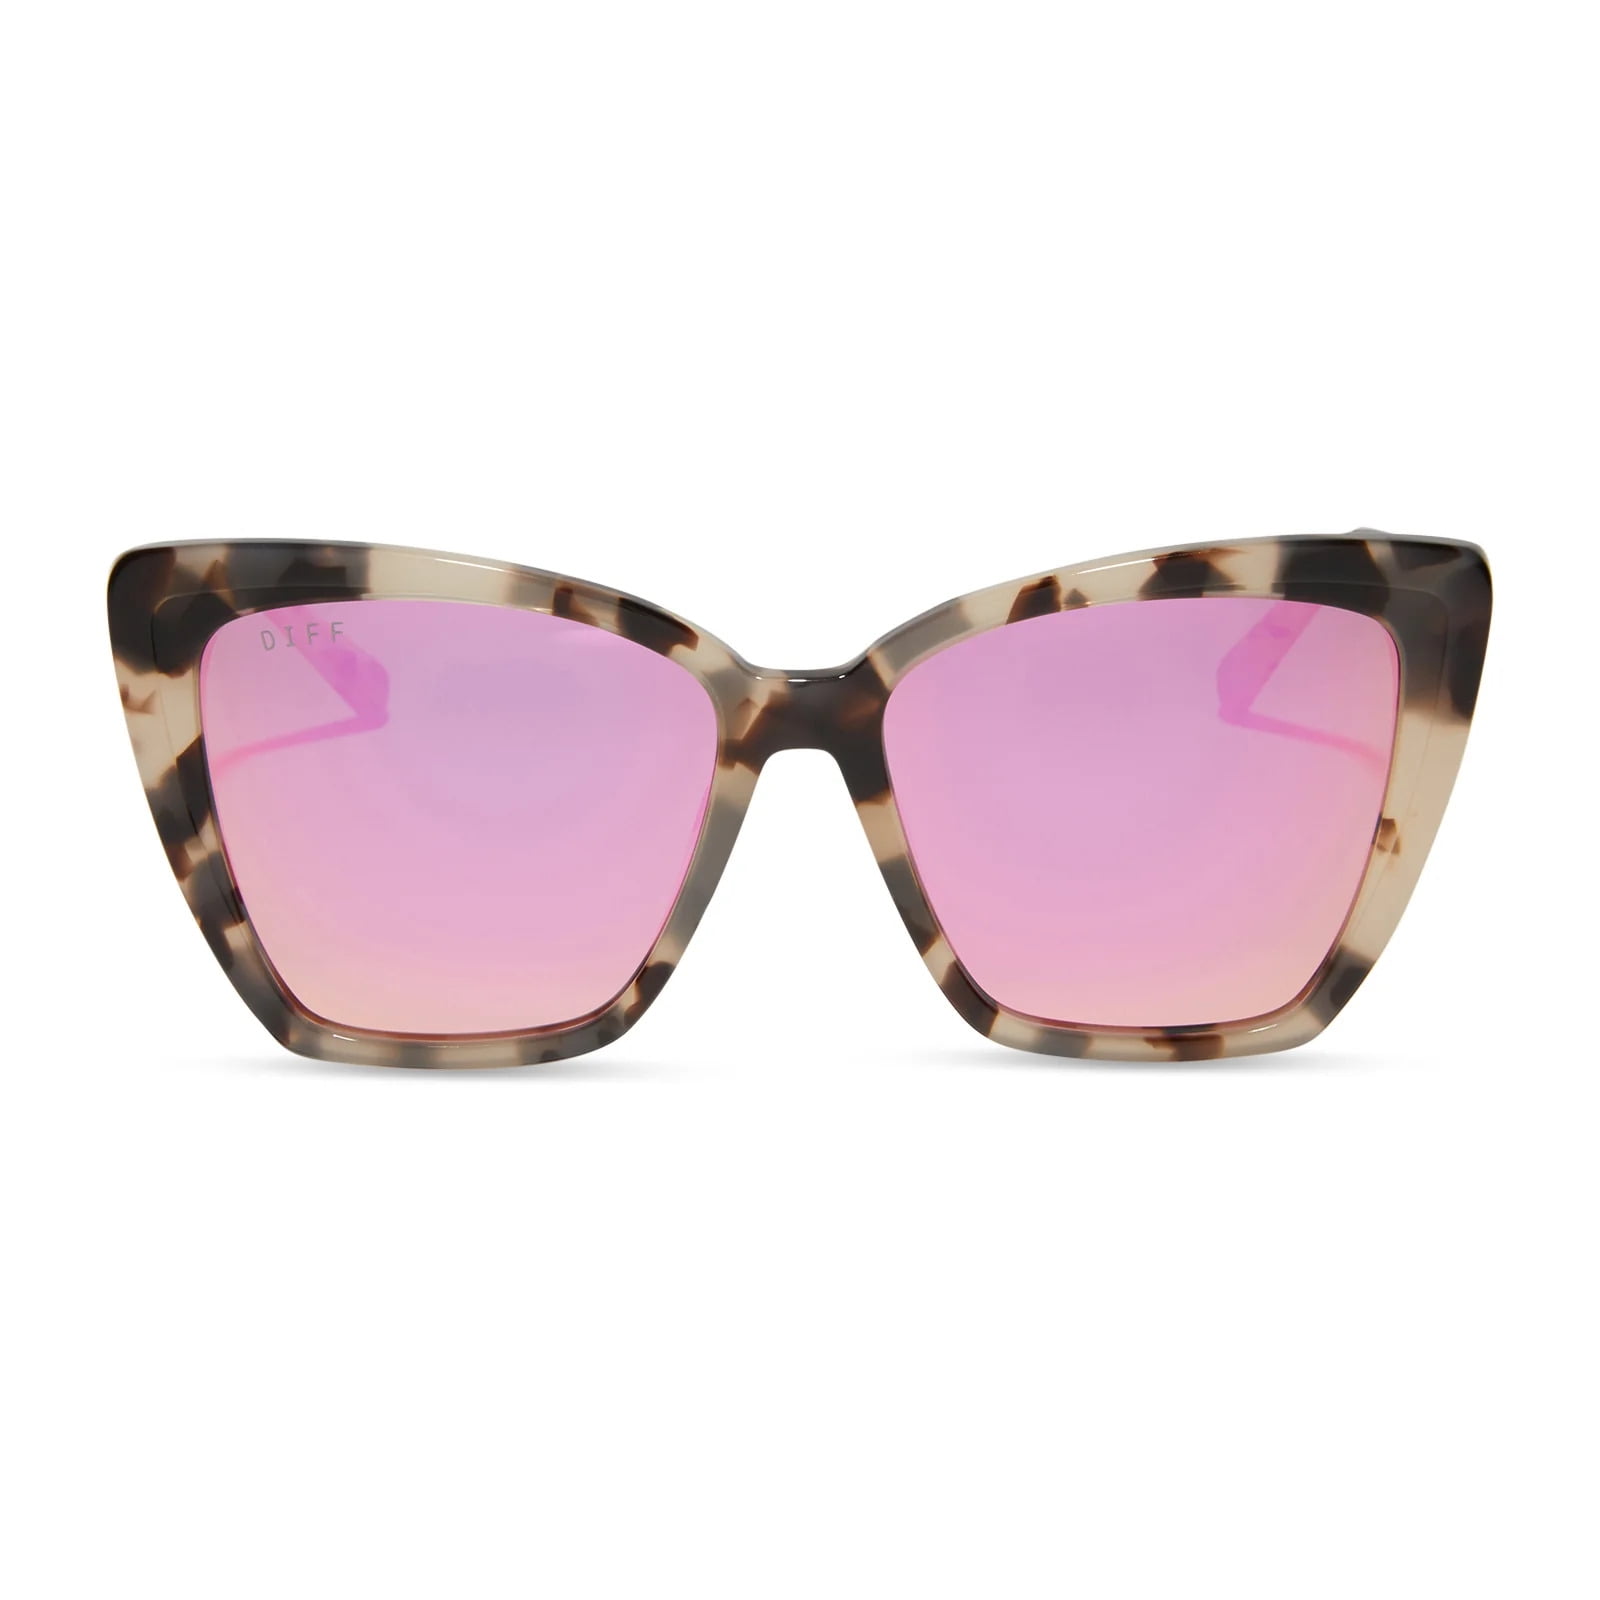 Halloweencostumes.com Women Women's Vintage Cat Eyes Pink/clear Glasses,  Black/pink/clear : Target